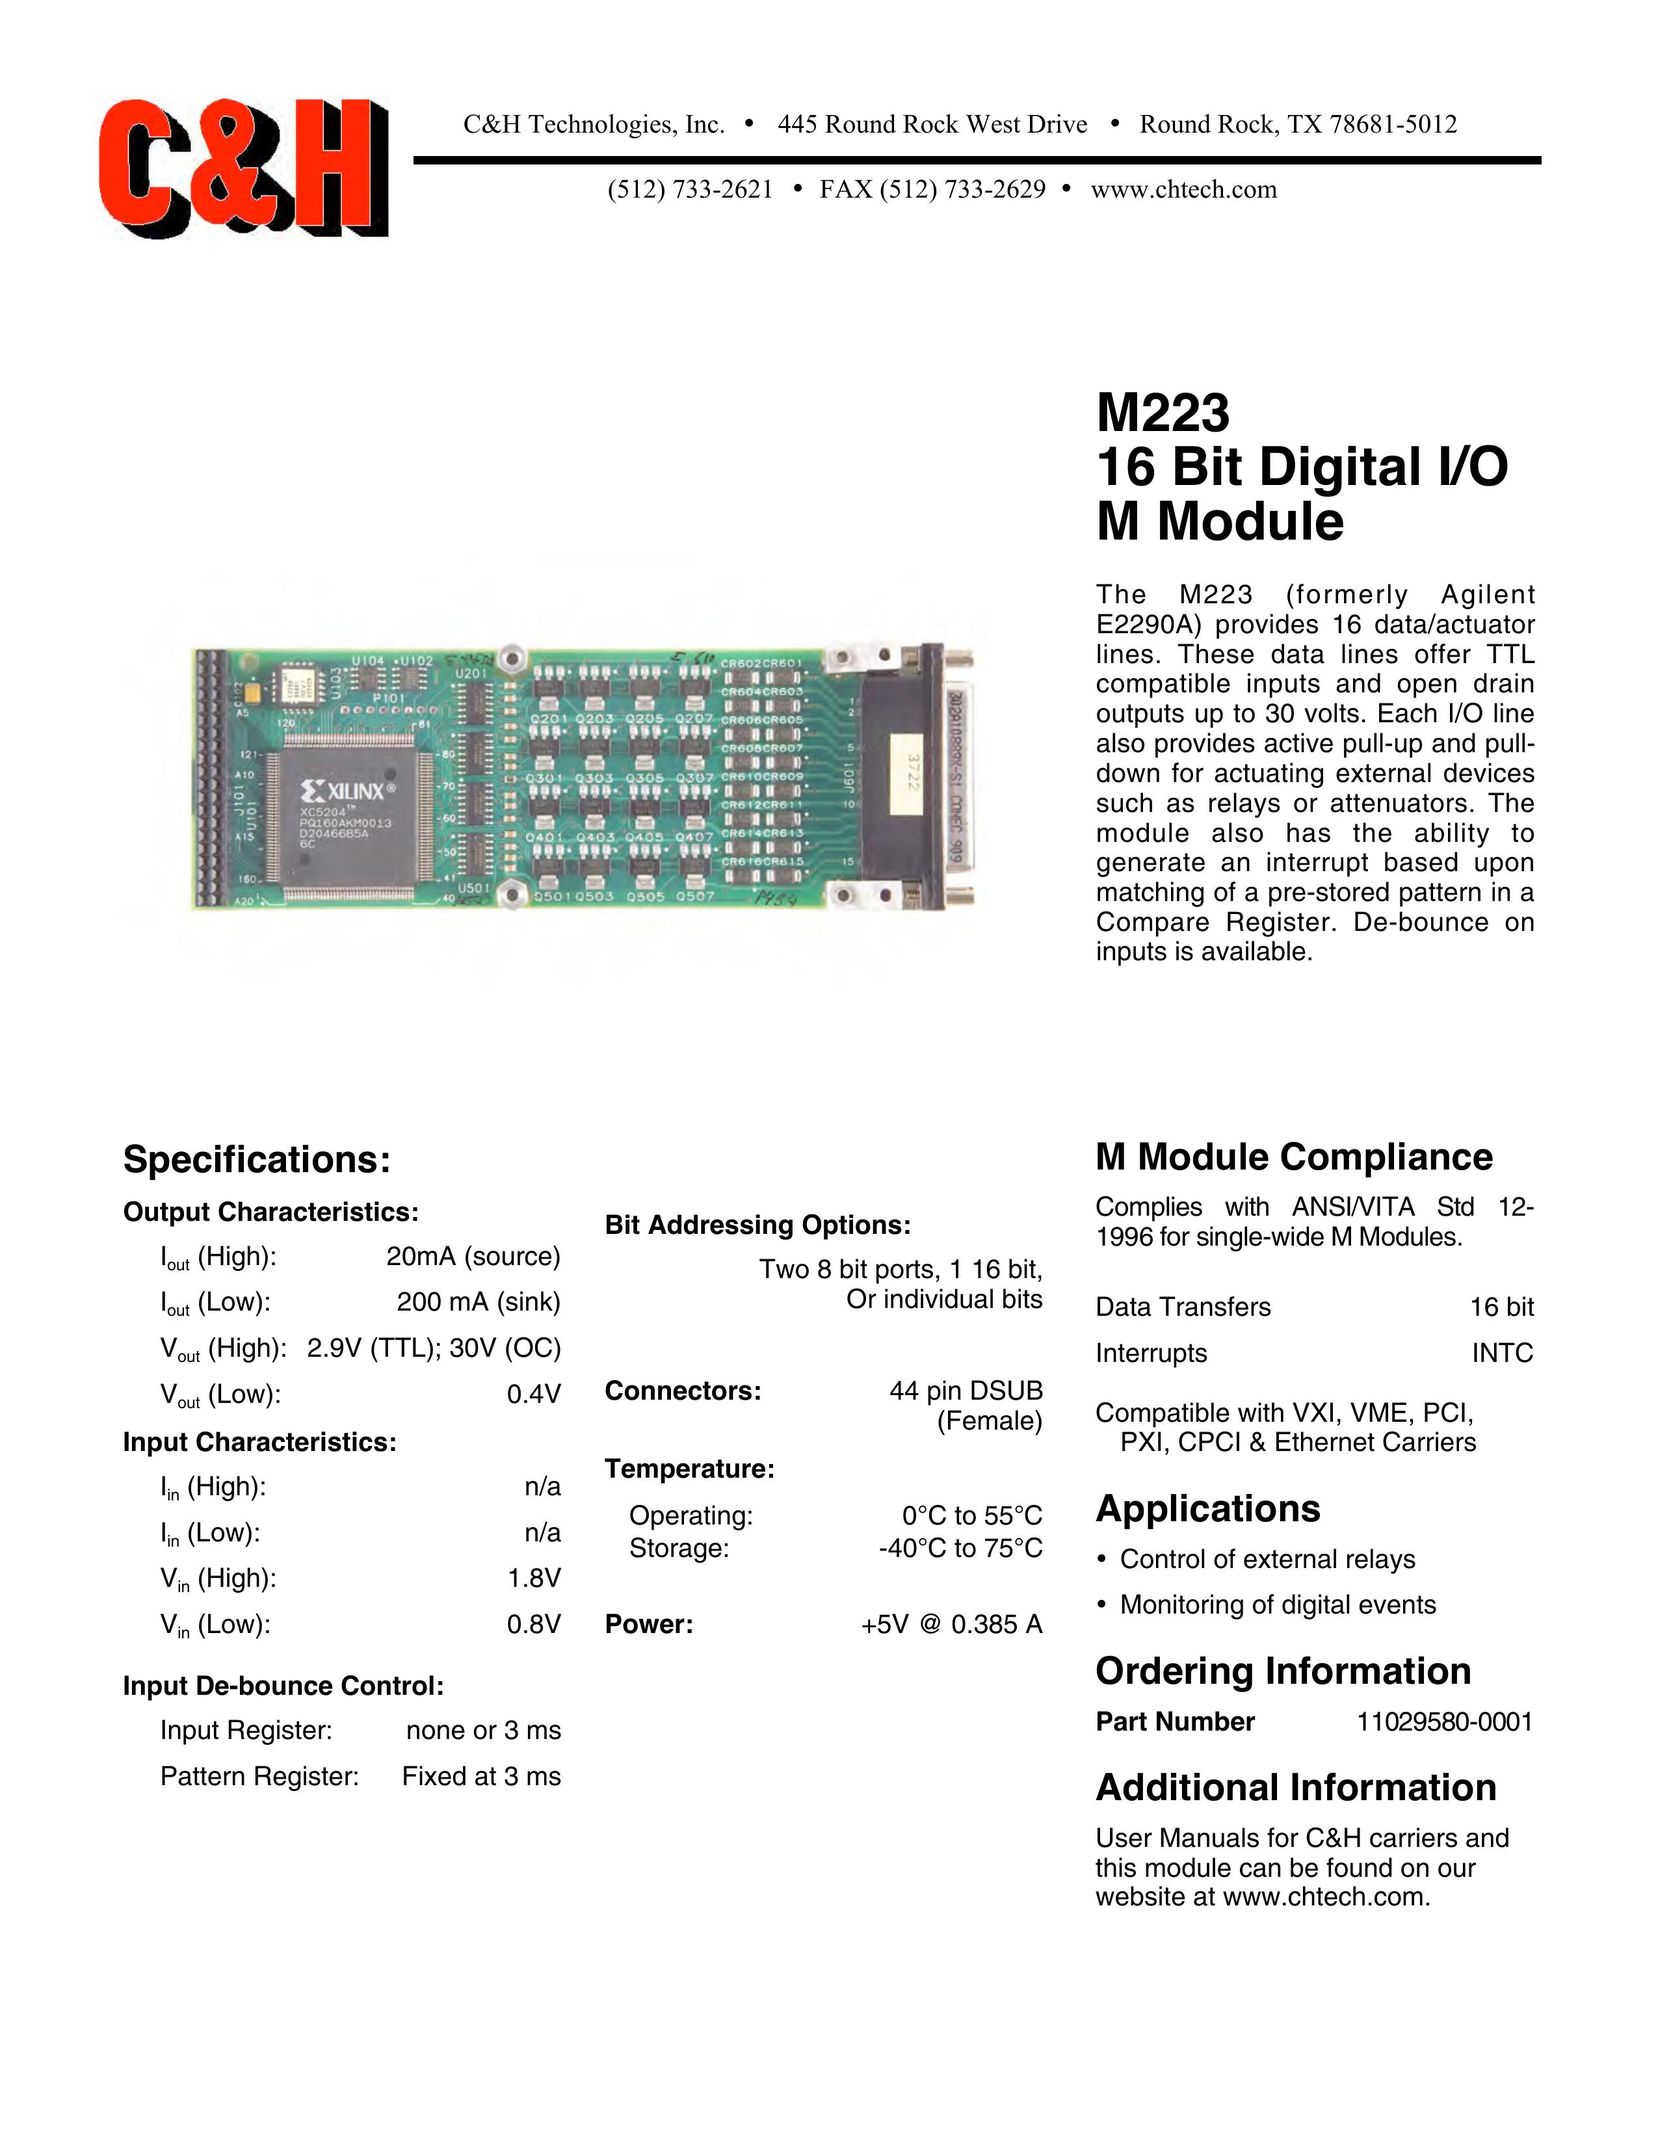 CH Tech M223 Network Card User Manual